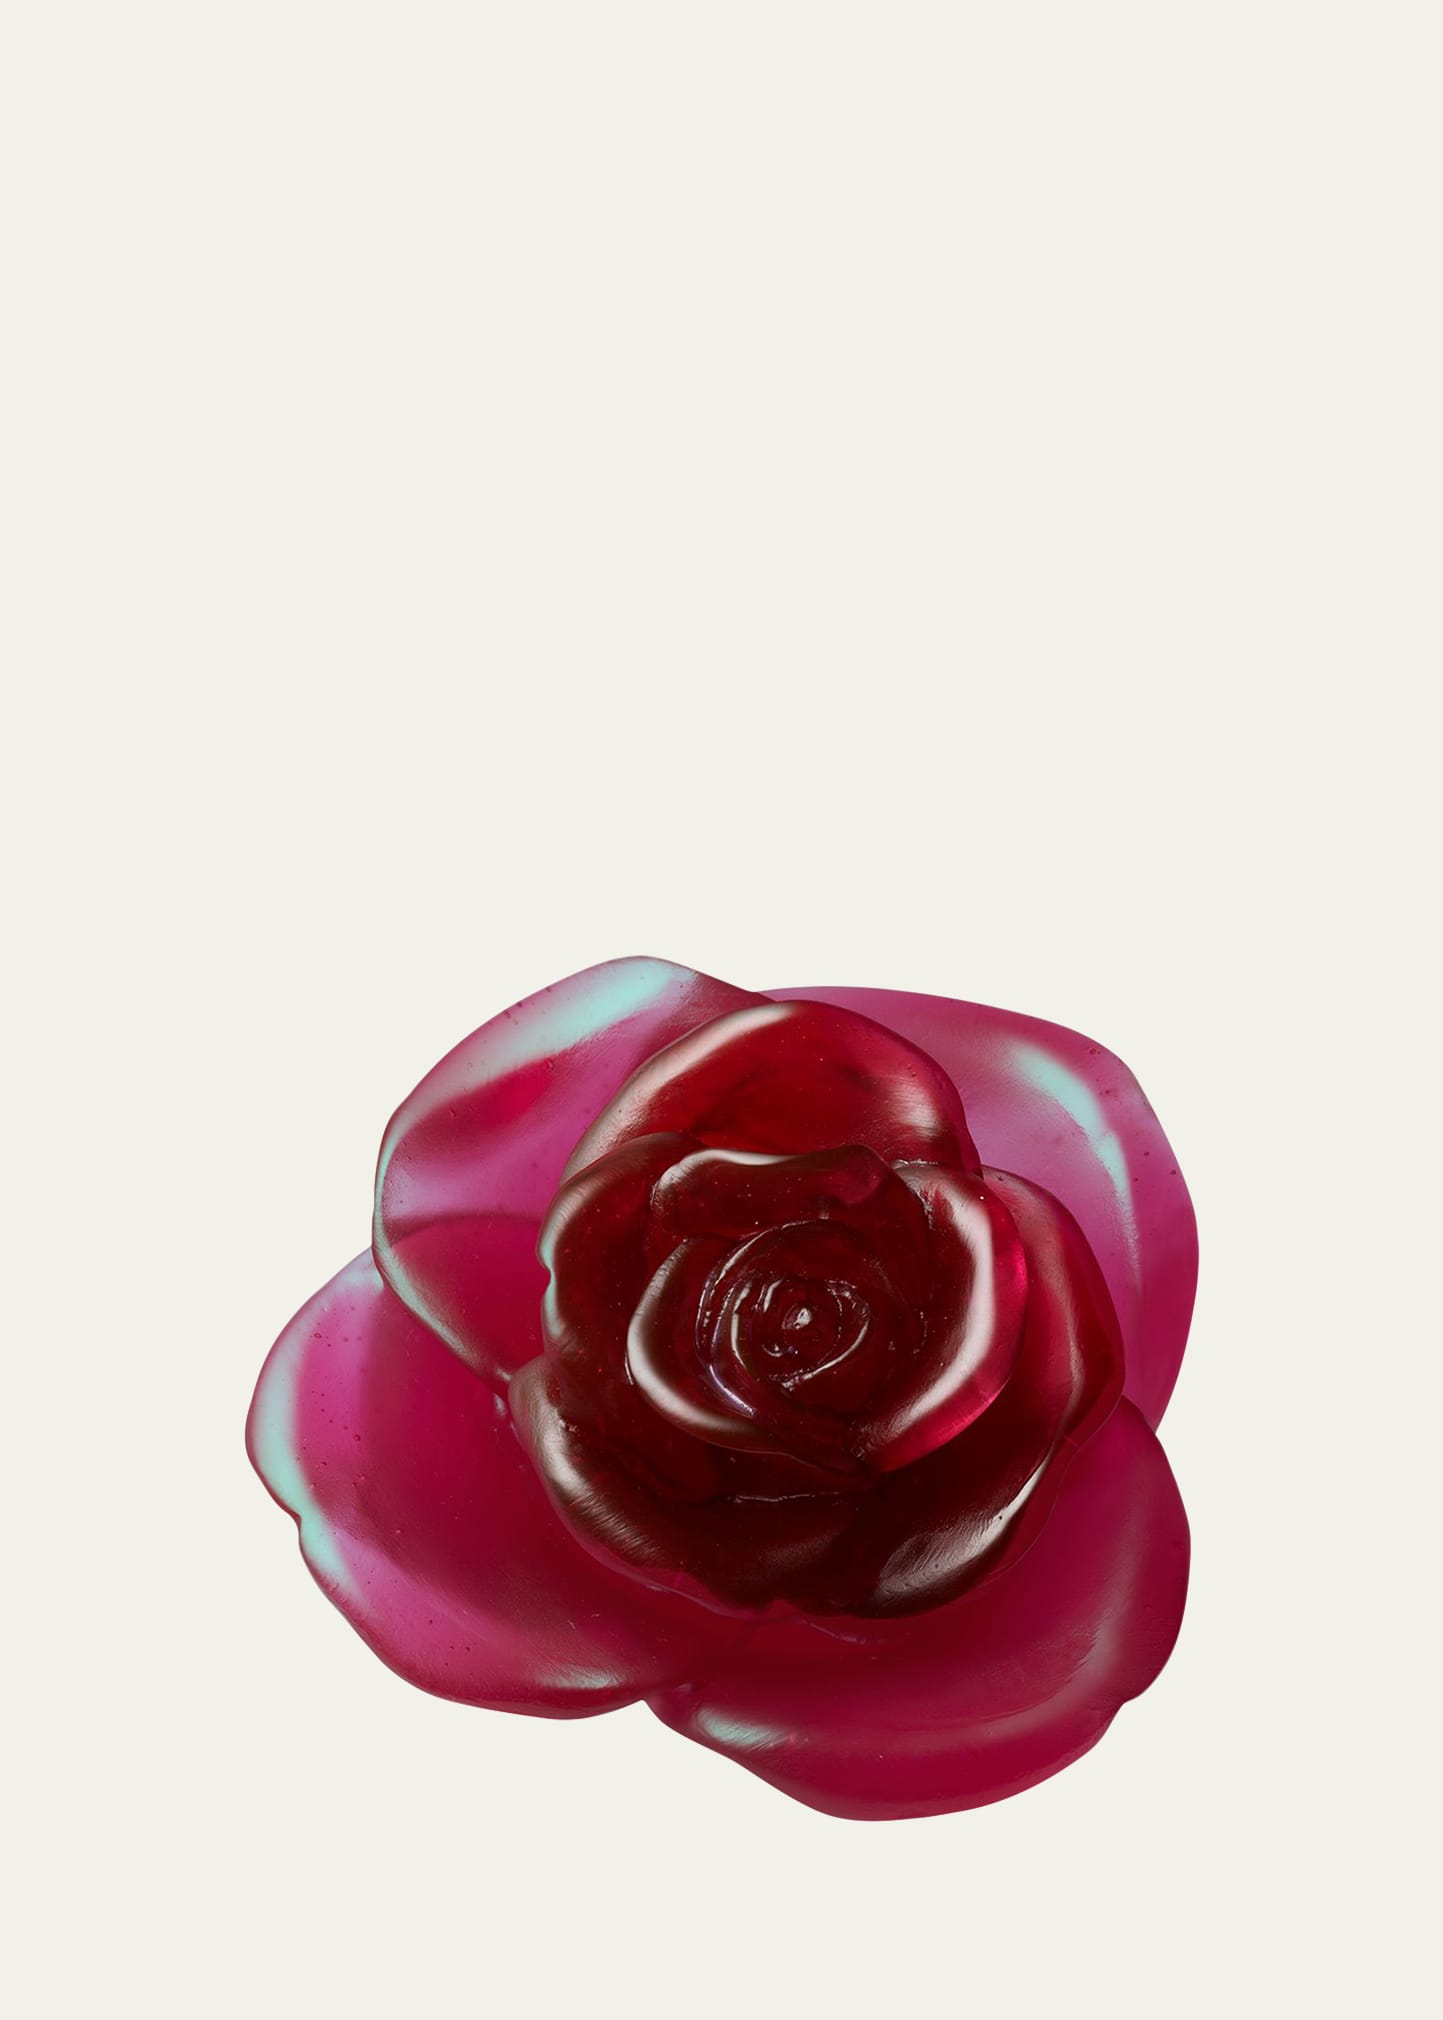 Red "Rose" Flower Sculpture